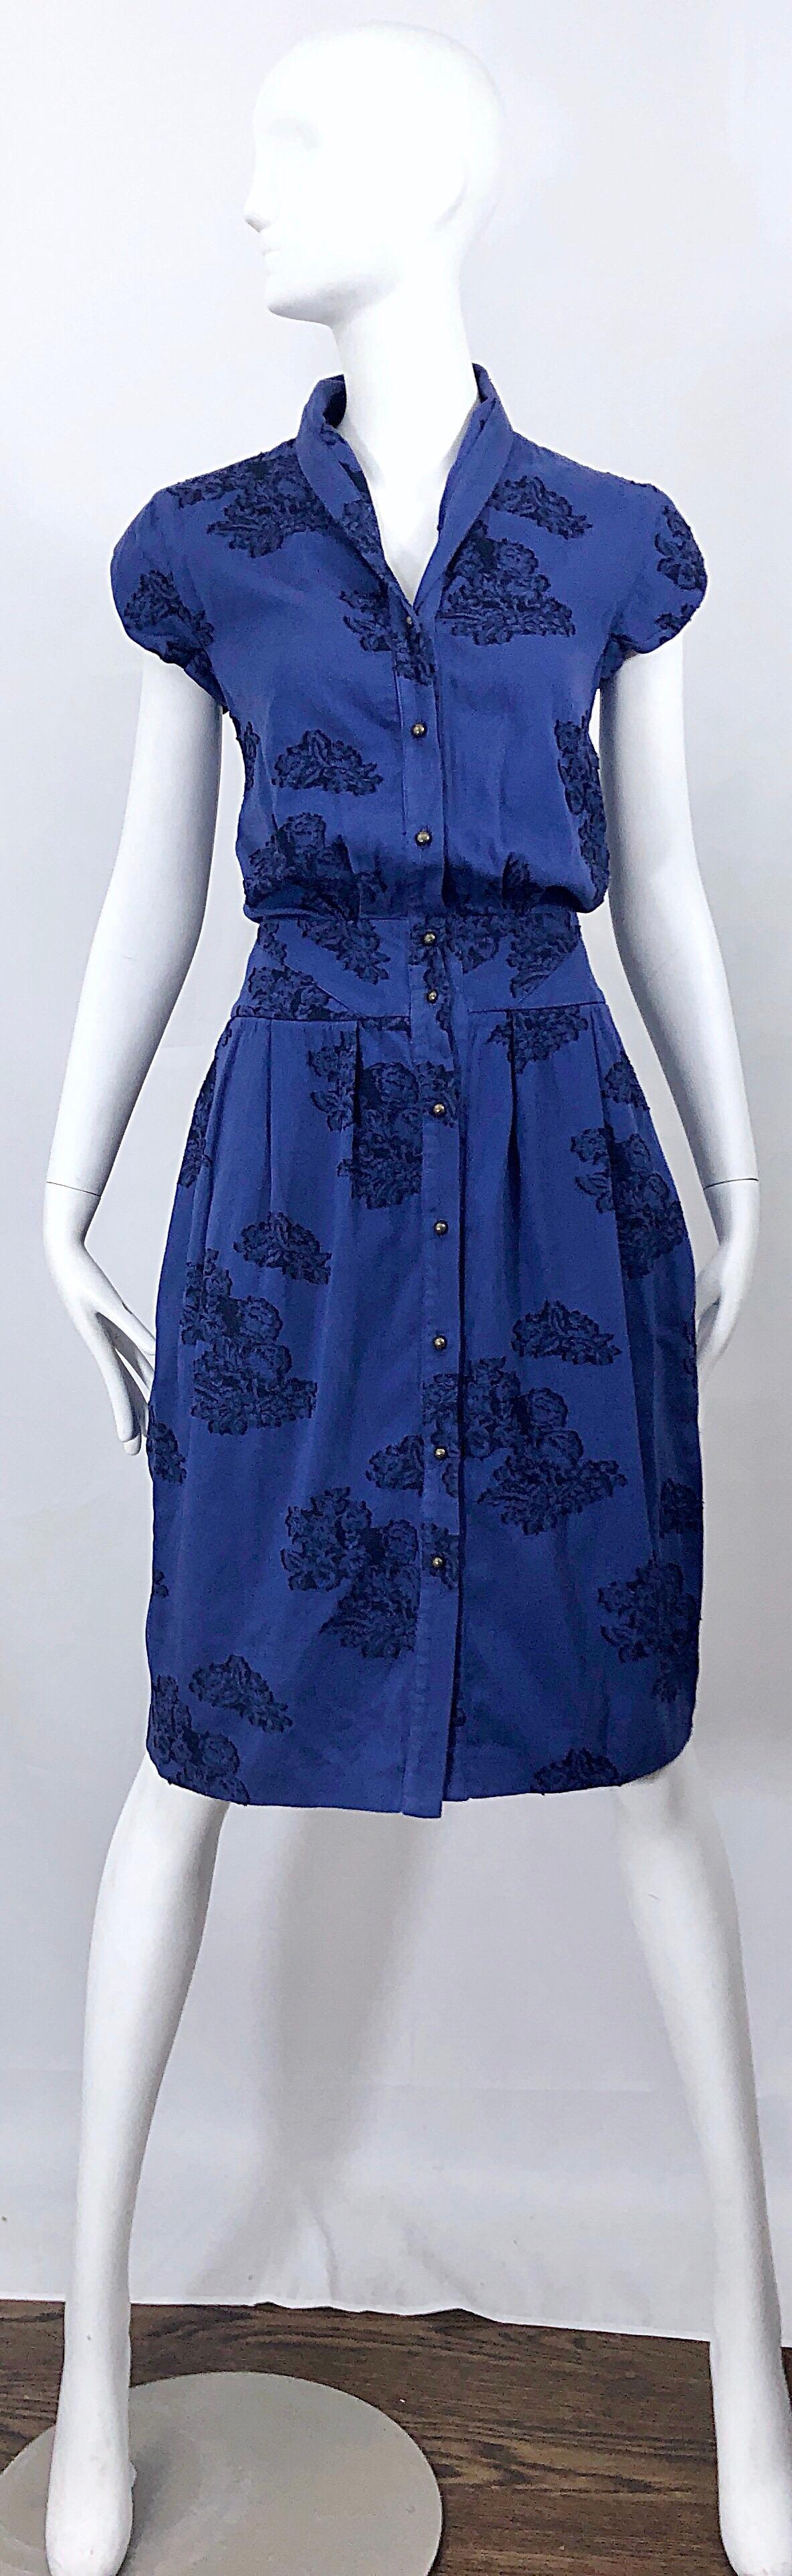 Alexander McQueen Blue + Black Lace Print Size 40 1950s Style Bustle Dress 11